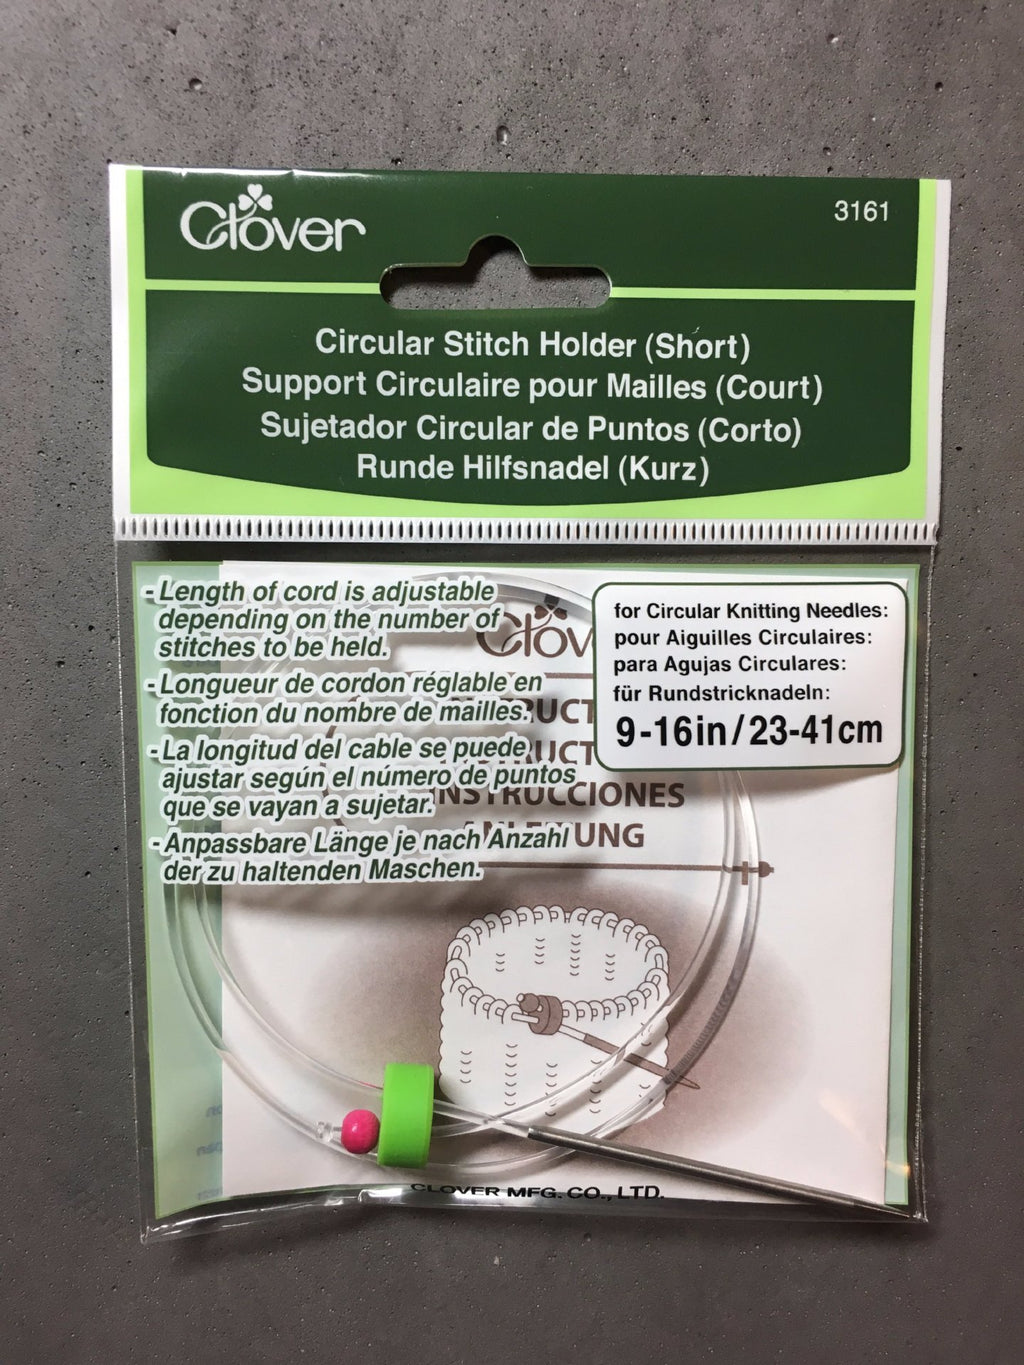 Clover Circular Stitch Holder Short 3161